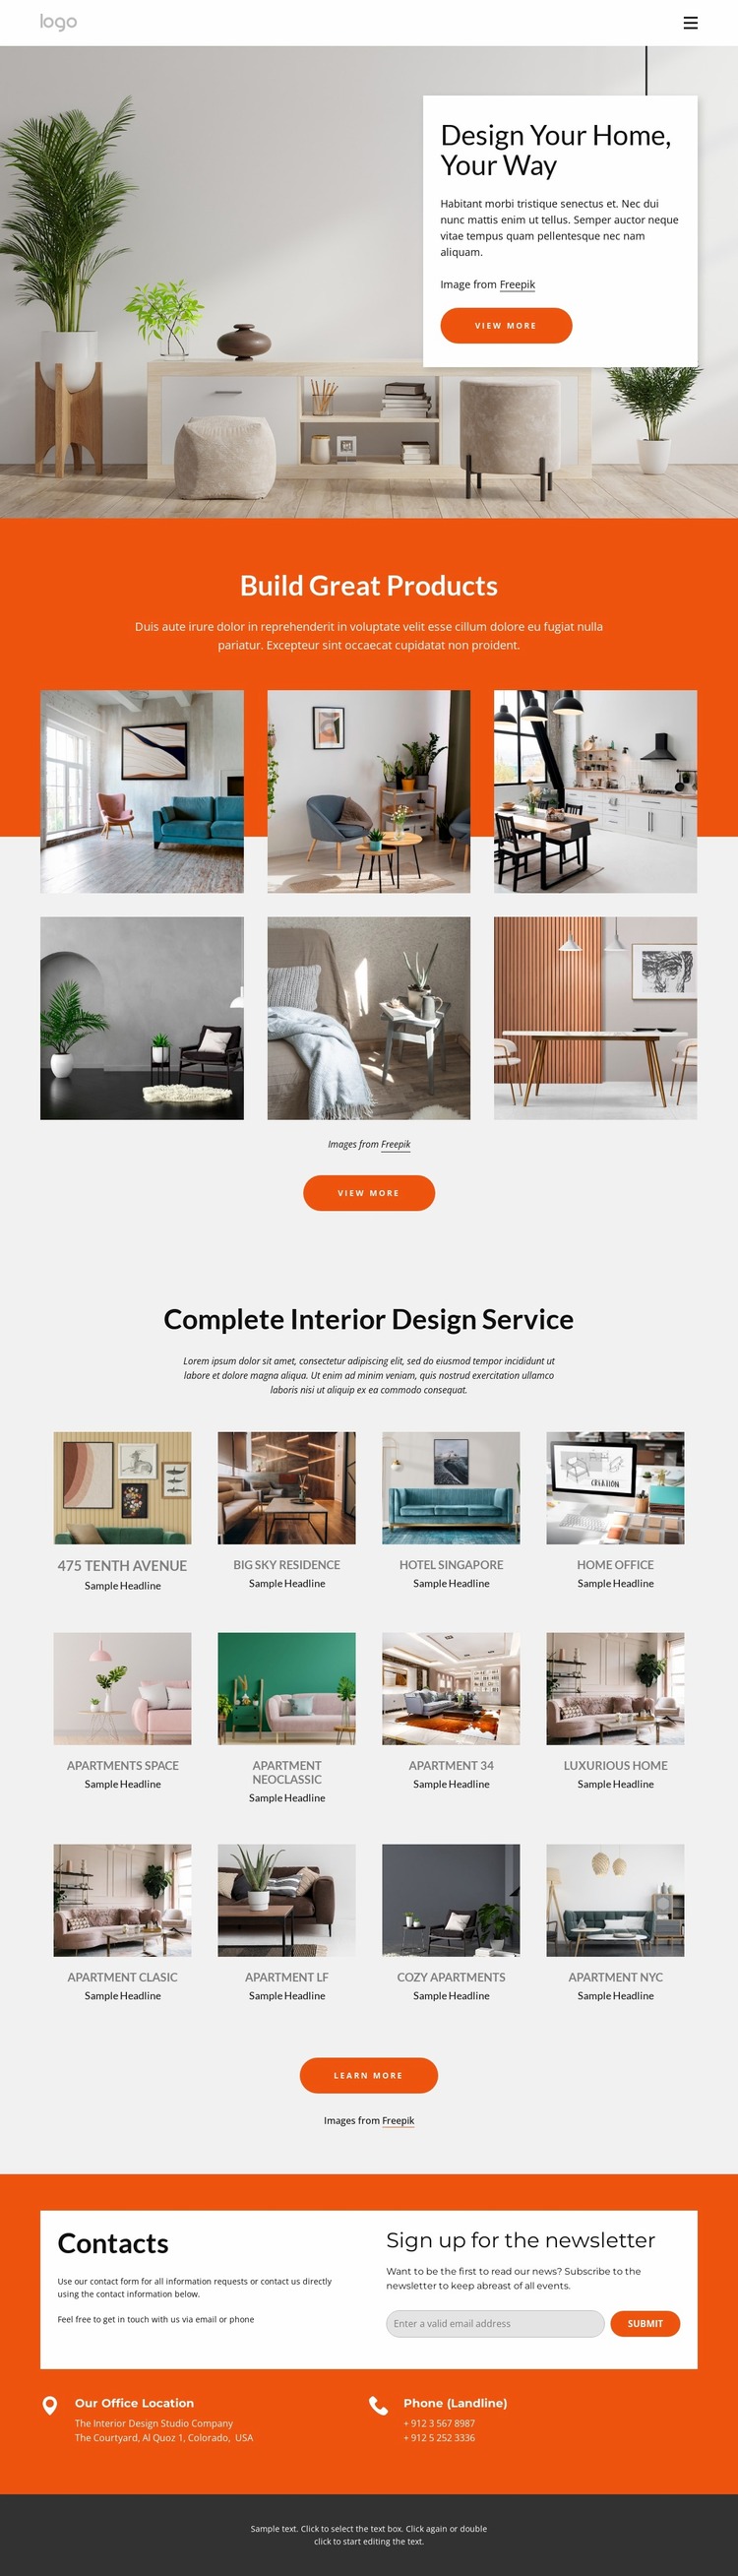 Interior design portfolio Website Mockup